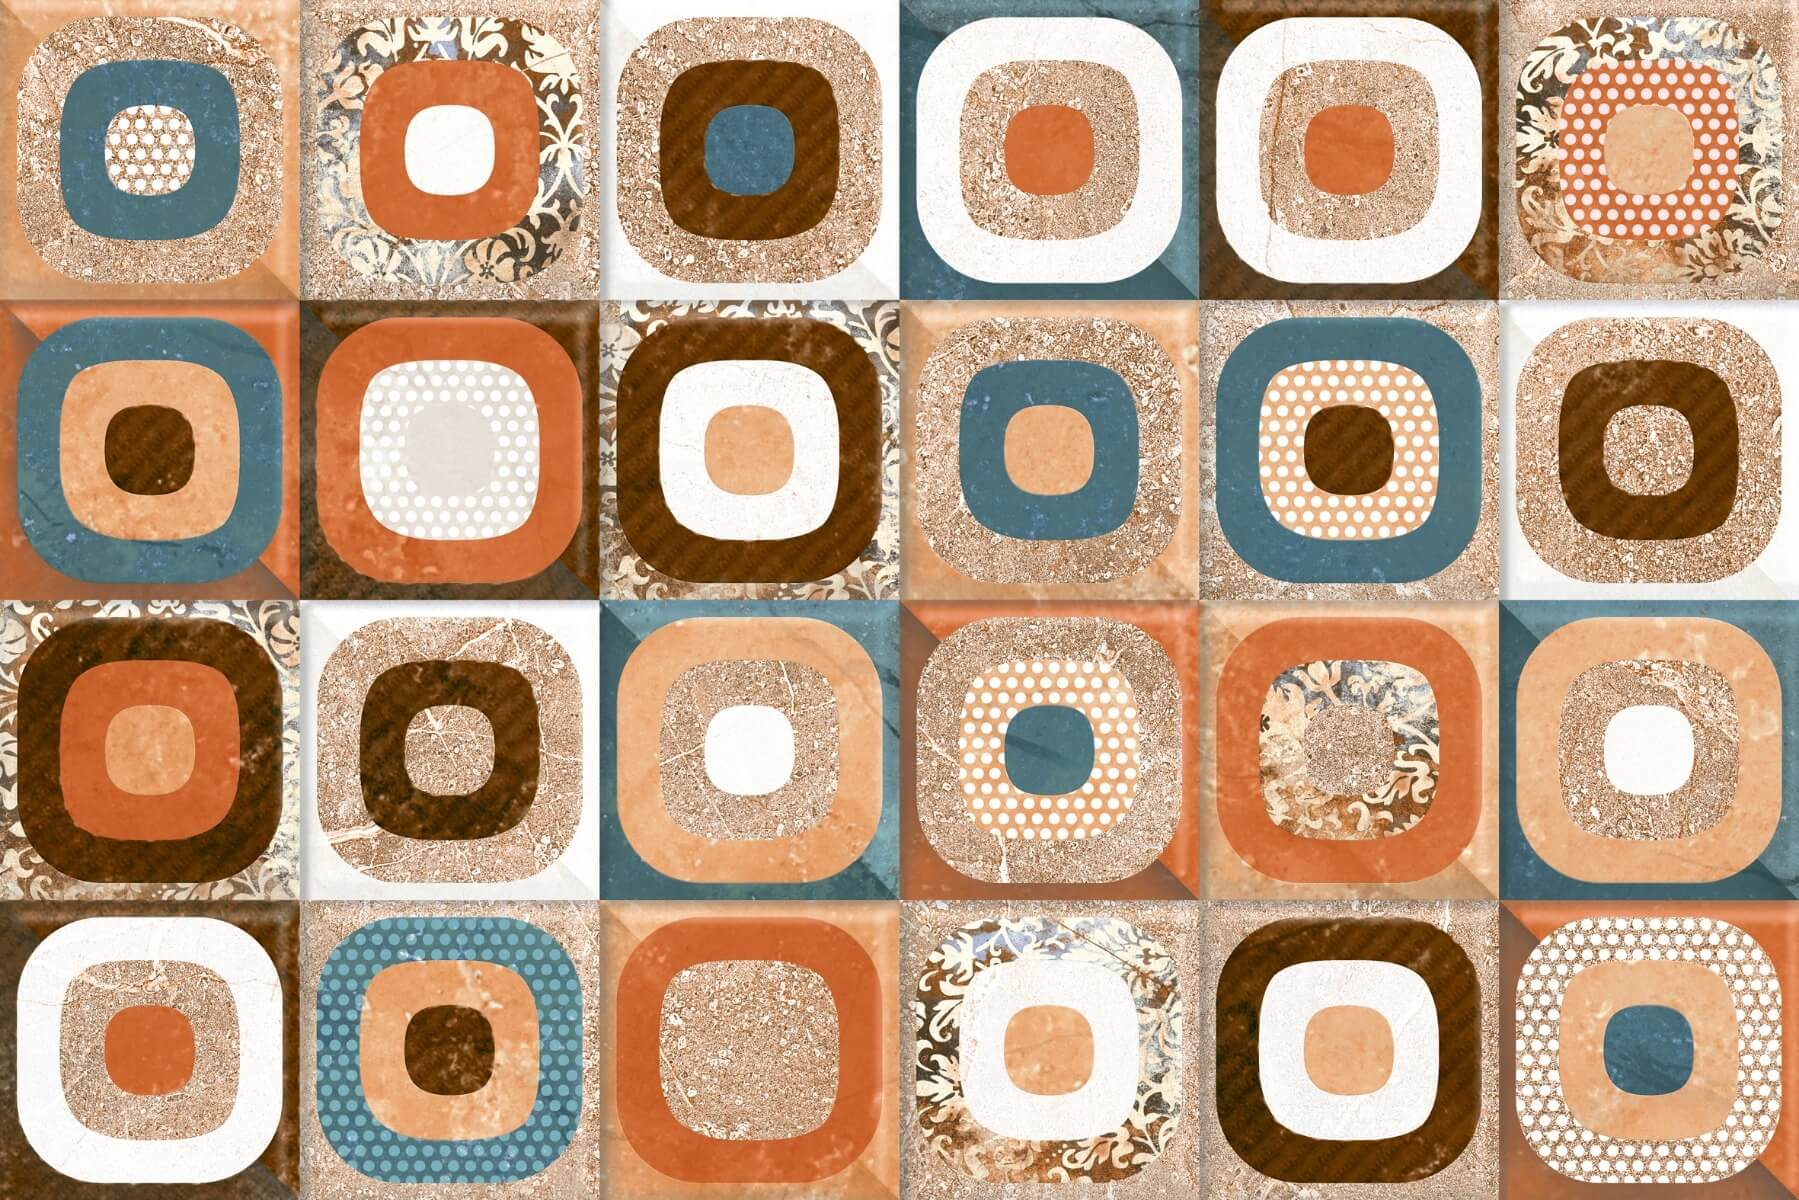 Beige Tiles for Bathroom Tiles, Kitchen Tiles, Accent Tiles